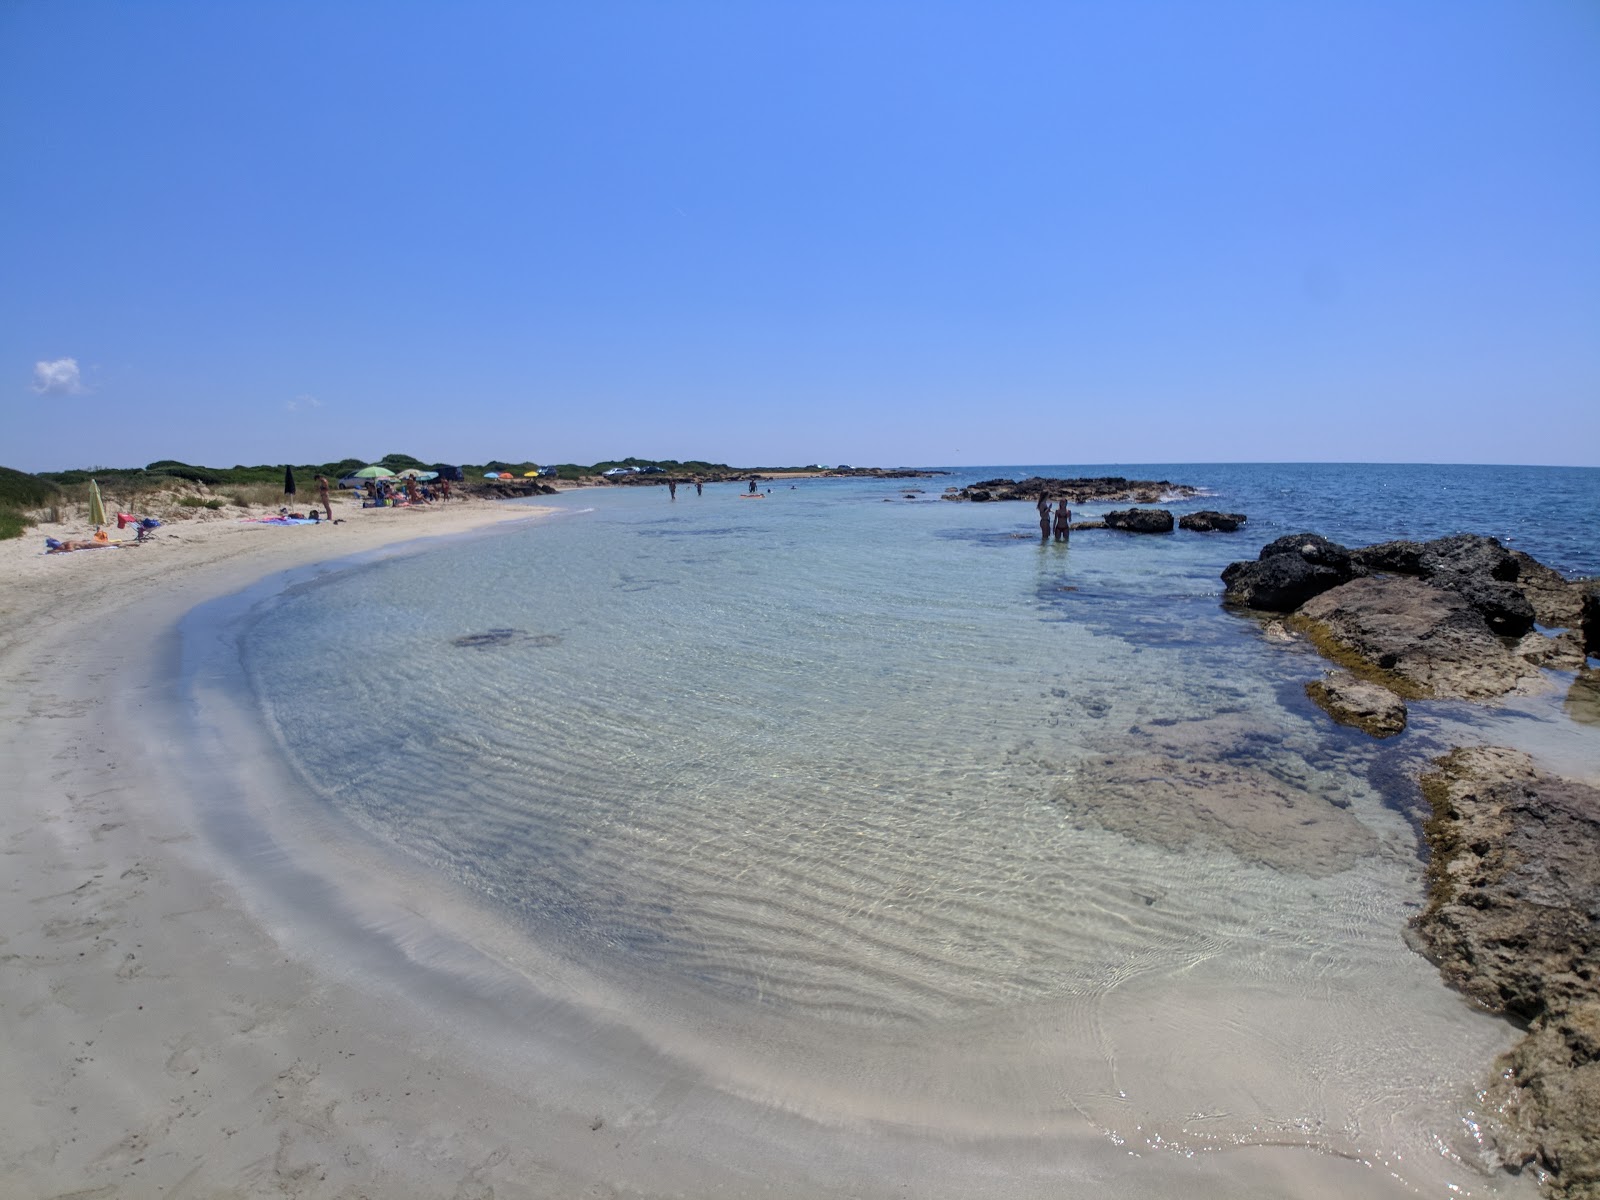 Foto de Spiaggia calette di salve com pequena baía